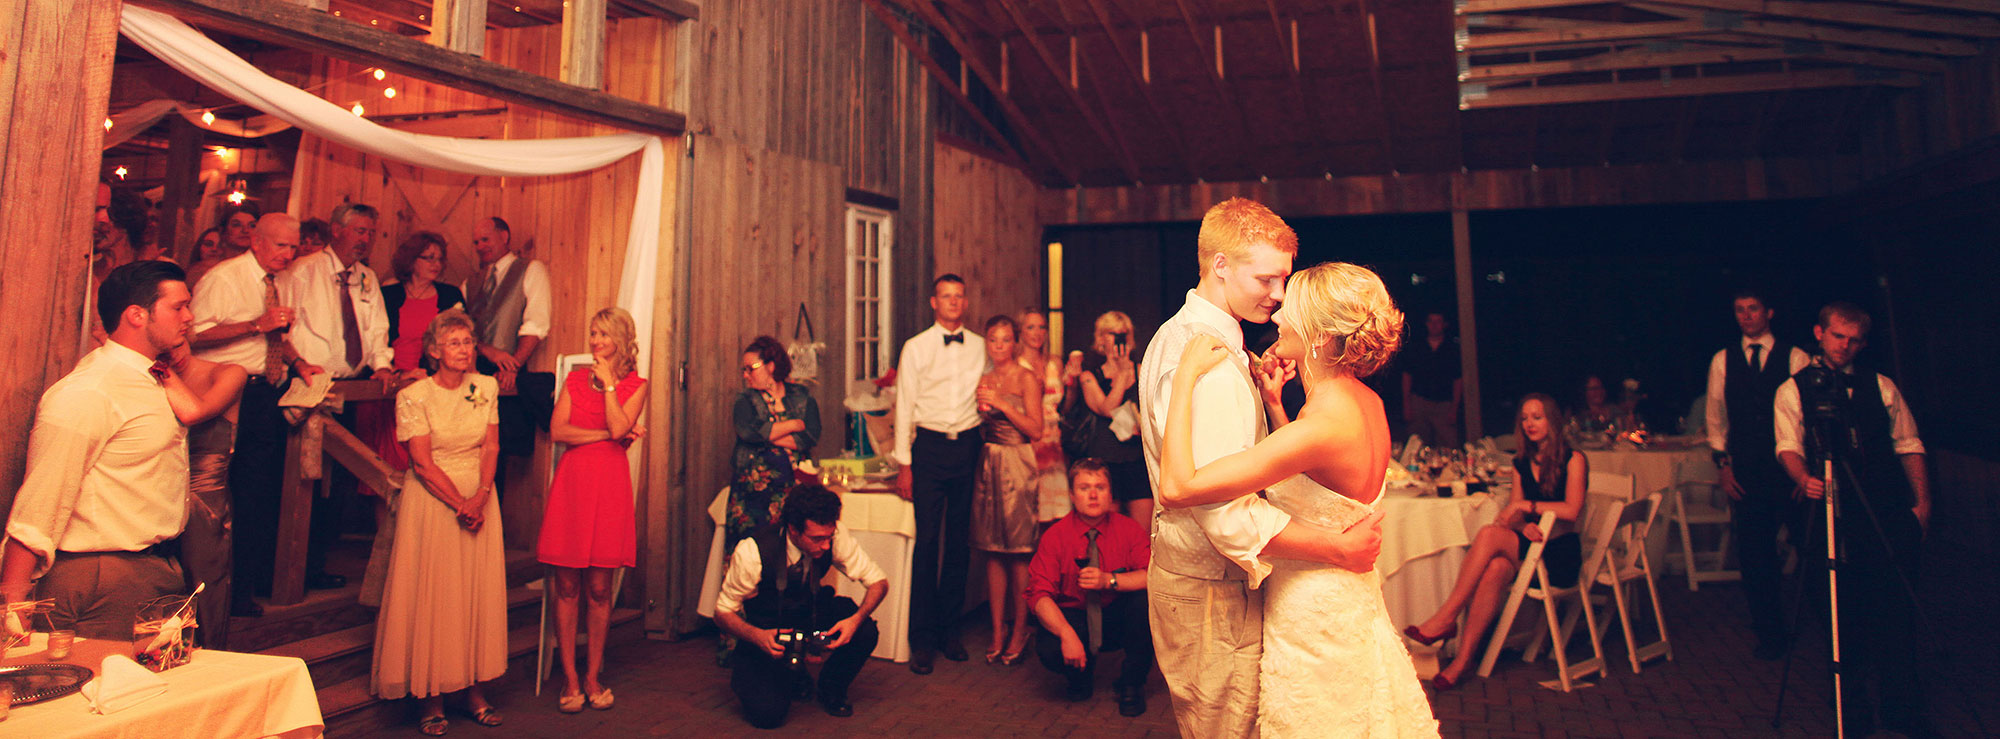 Barn Wedding Venues